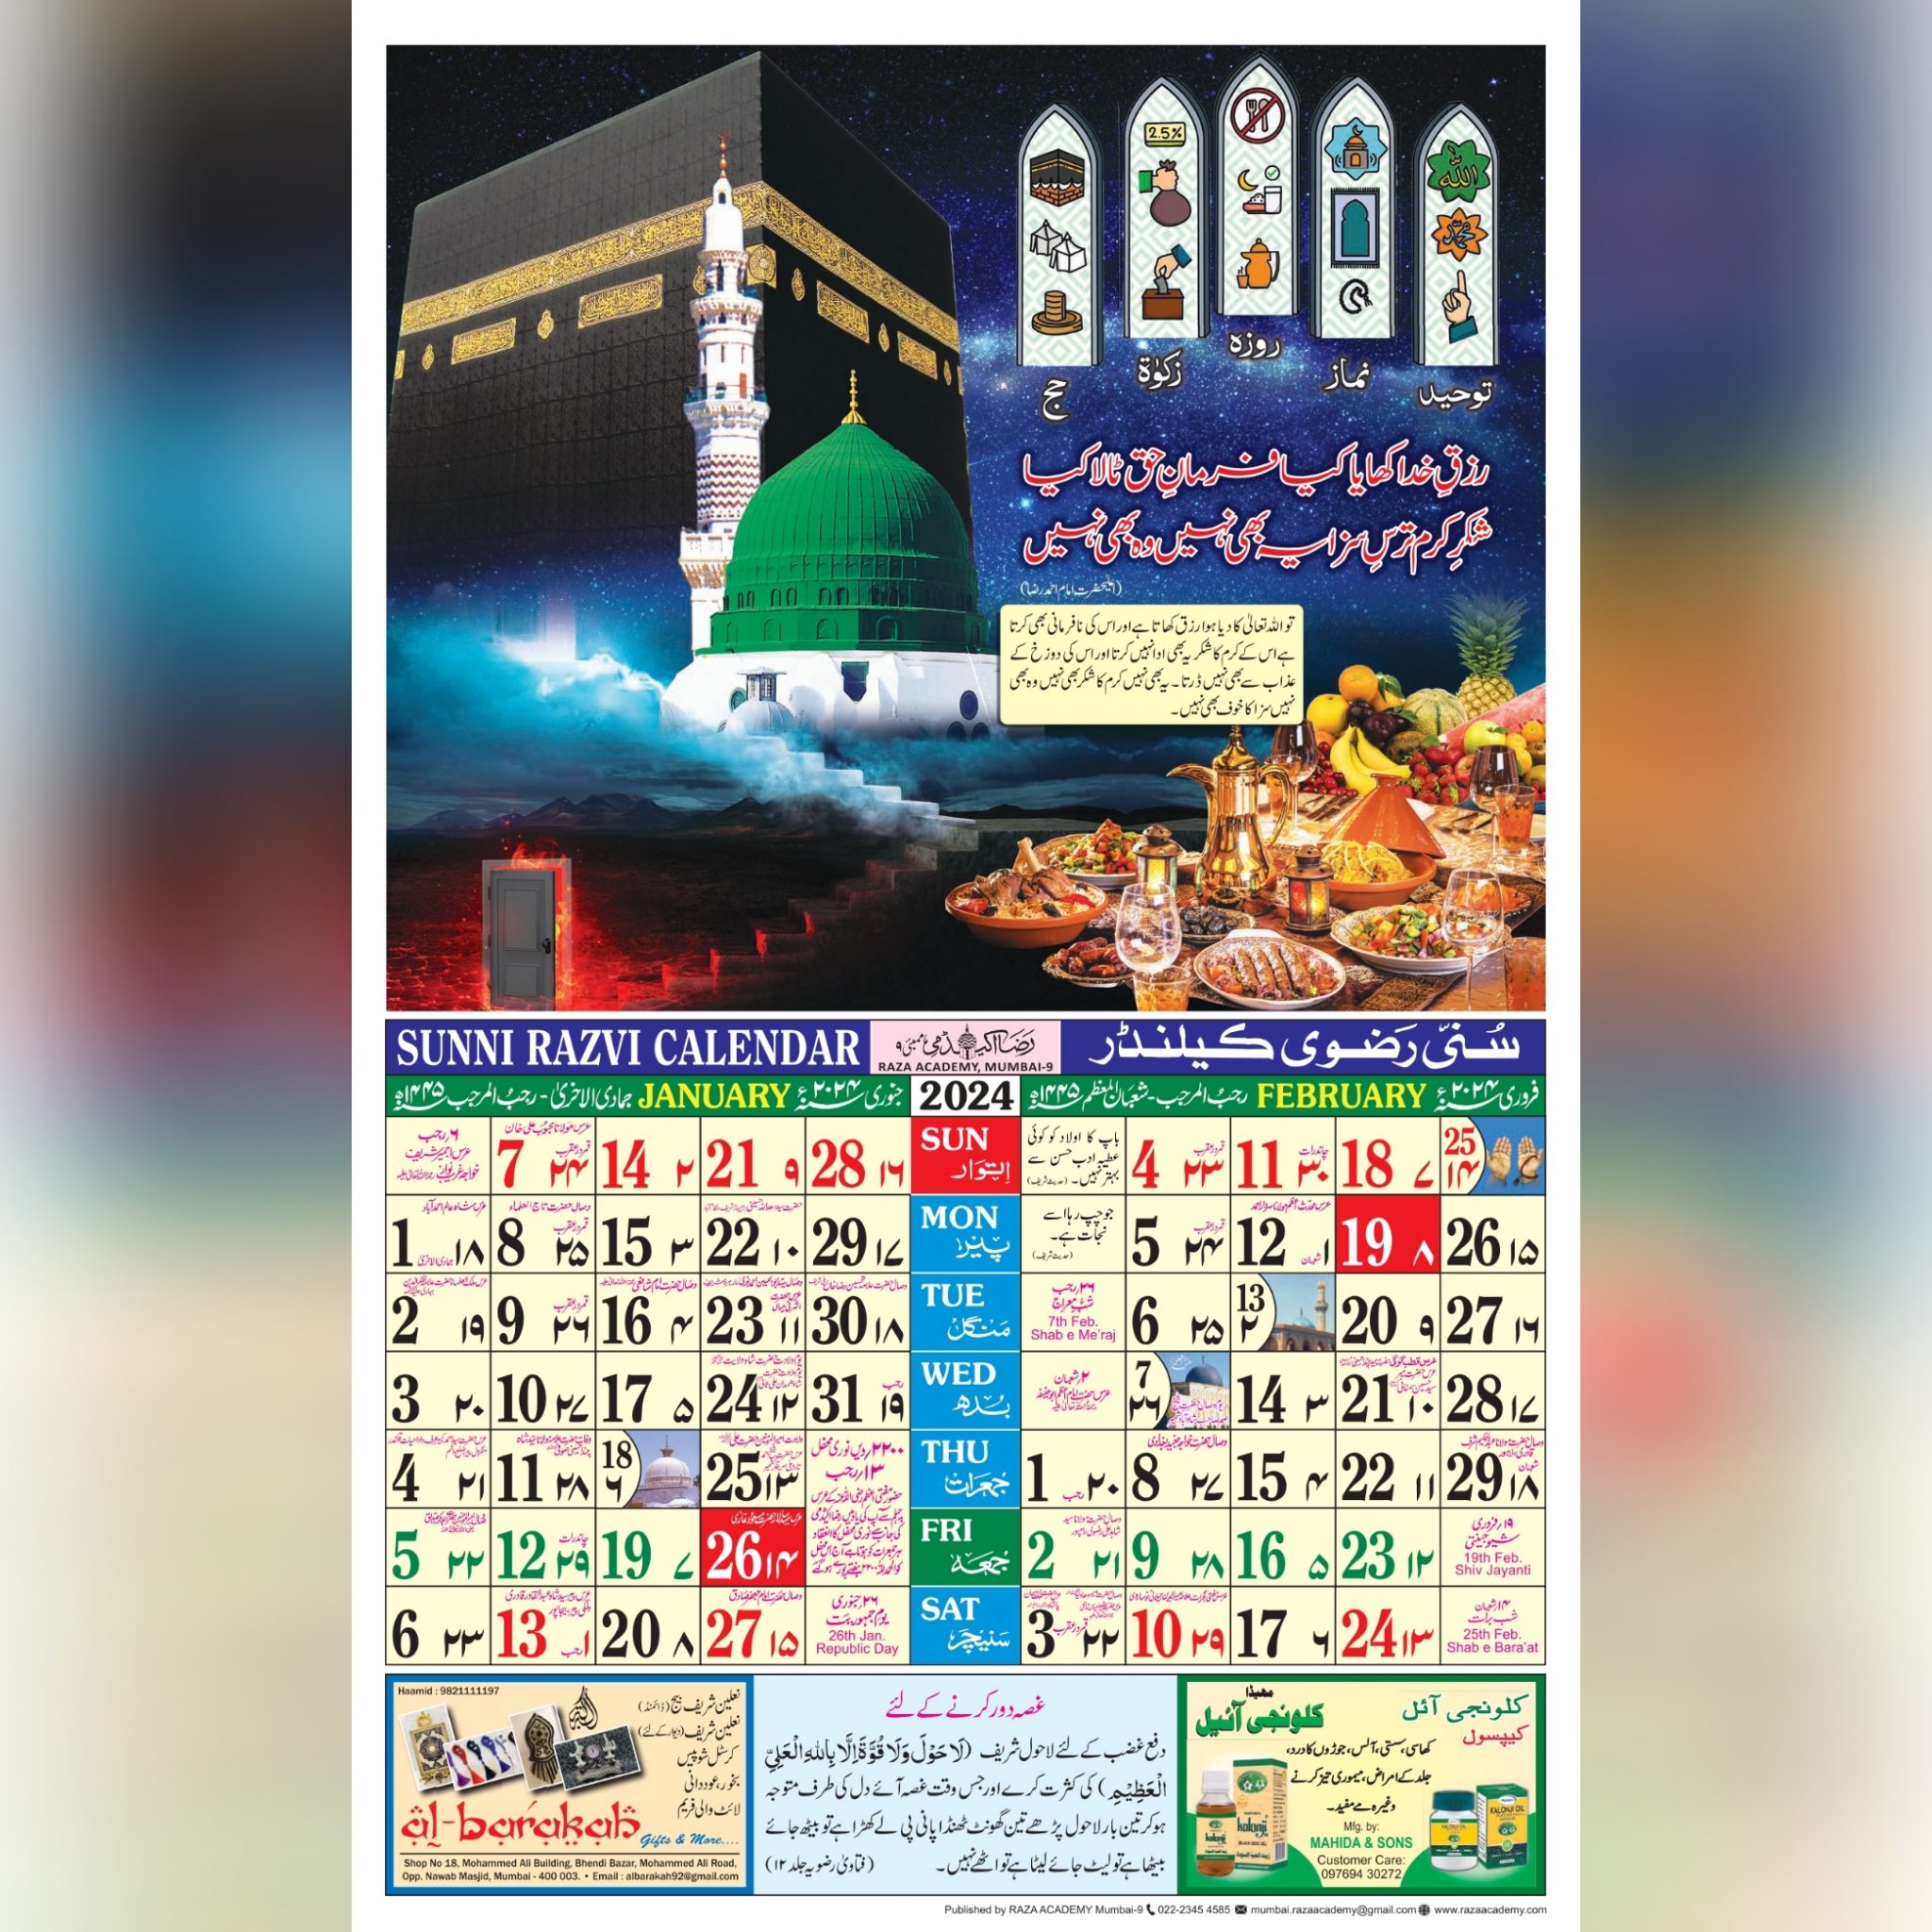 Sunni Razvi Calendar 2024 /  सुन्नी रज़वी कैलेंडर 2024 (Urdu)